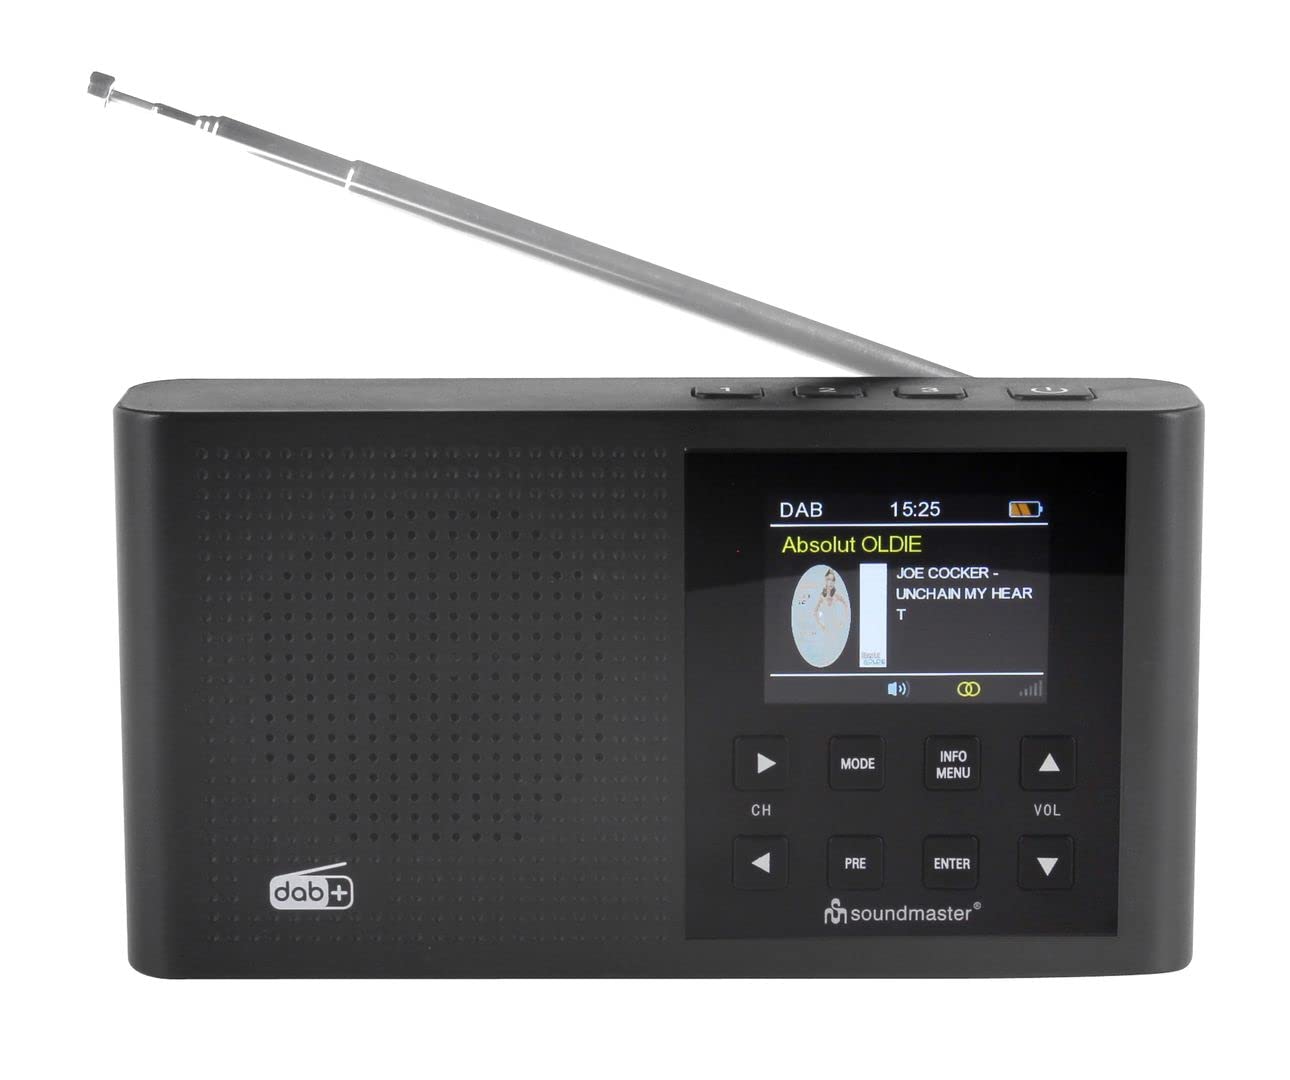 Audio & Hi-Fi Soundmaster: Dab+/Fm Pll Radio With 2Inchcolour Display And Build In Rechargeable Battery NUOVO SIGILLATO SUBITO DISPONIBILE